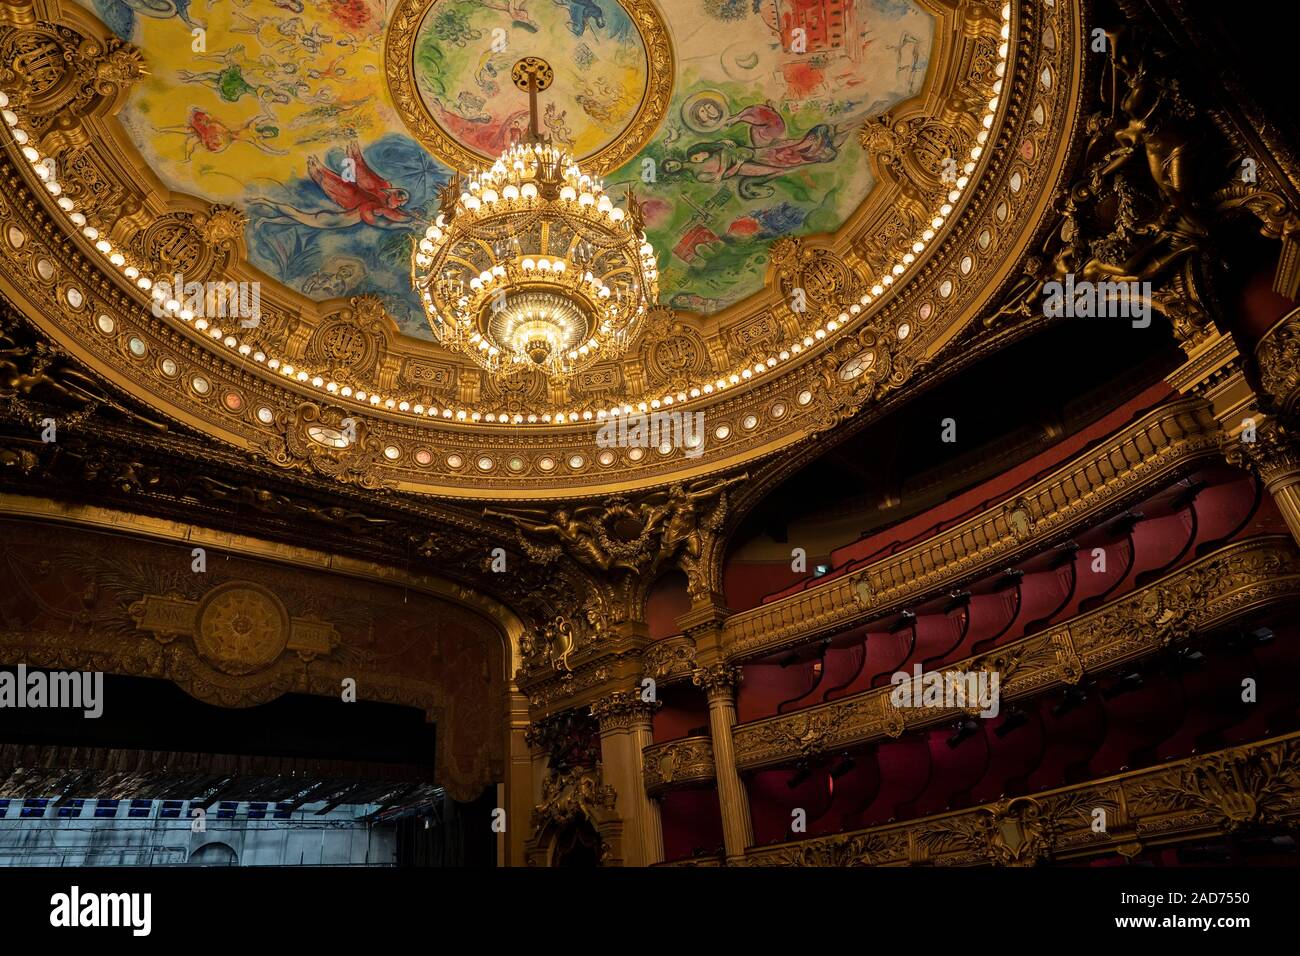 An interior view of Opera de Paris, Palais Garnier. It was built from 1861 to 1875 for the Paris Opera house. Stock Photo